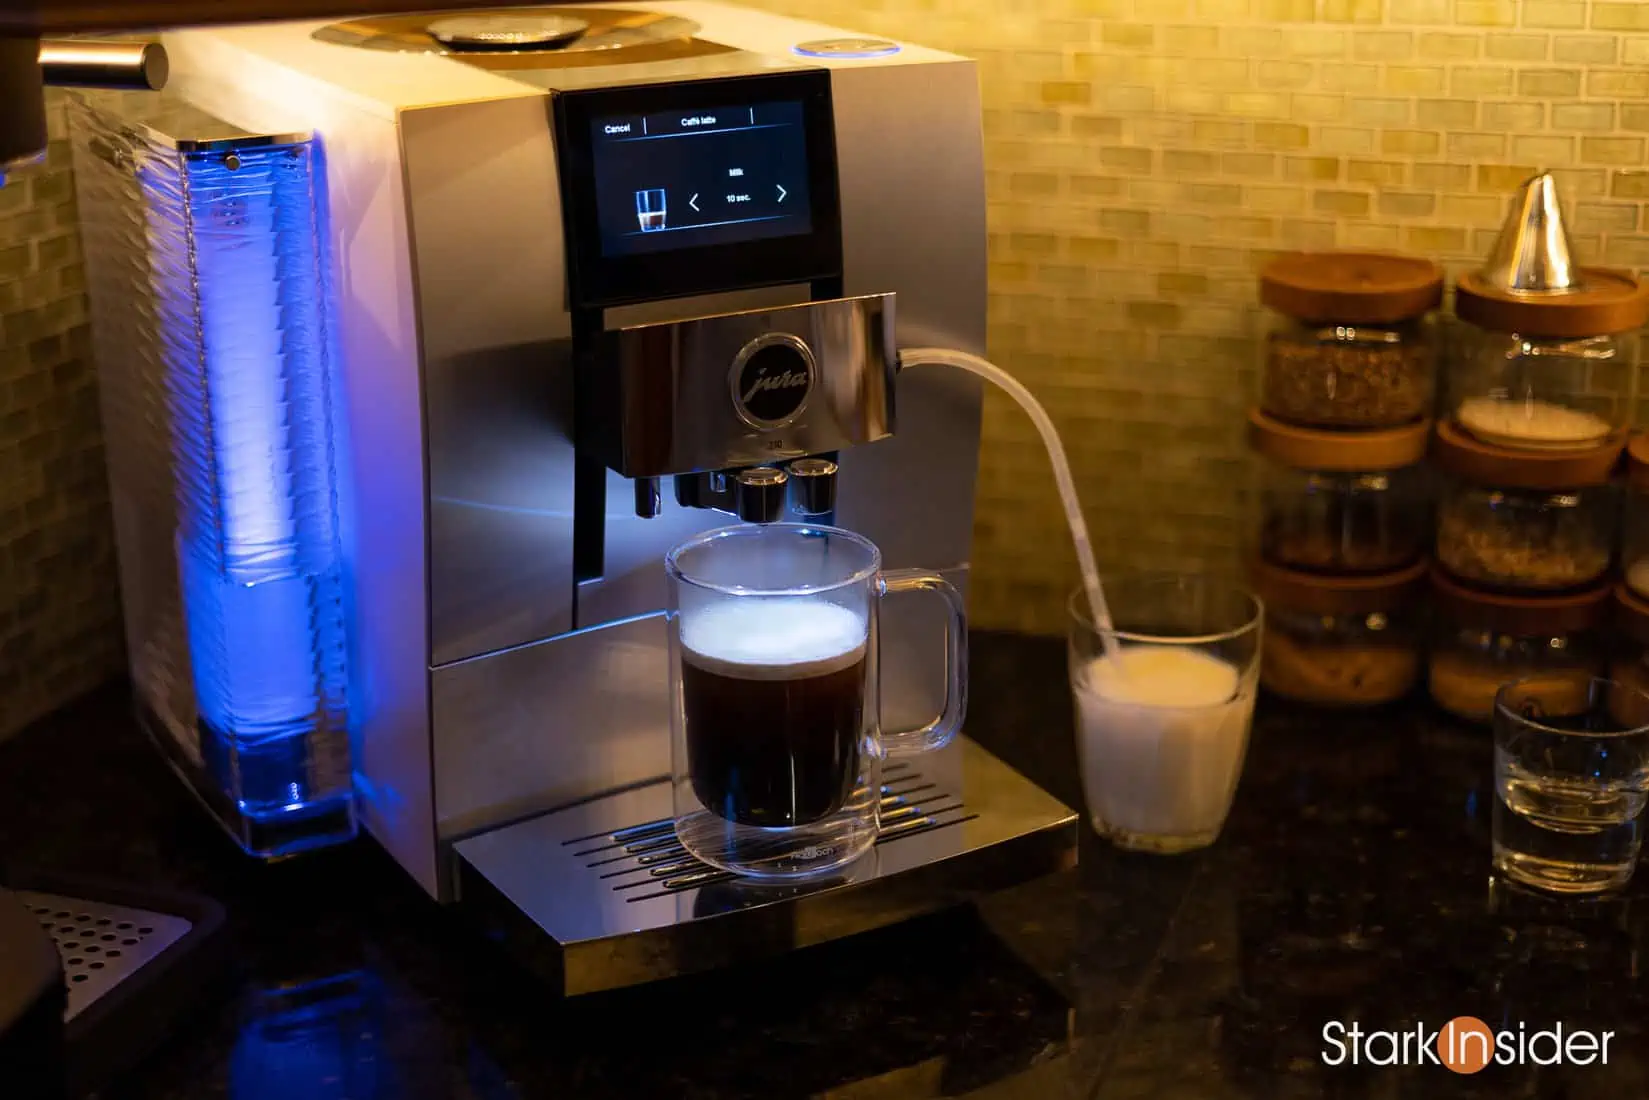 Nespresso Vertuo Coffee Mug Set Review & UNBOXING